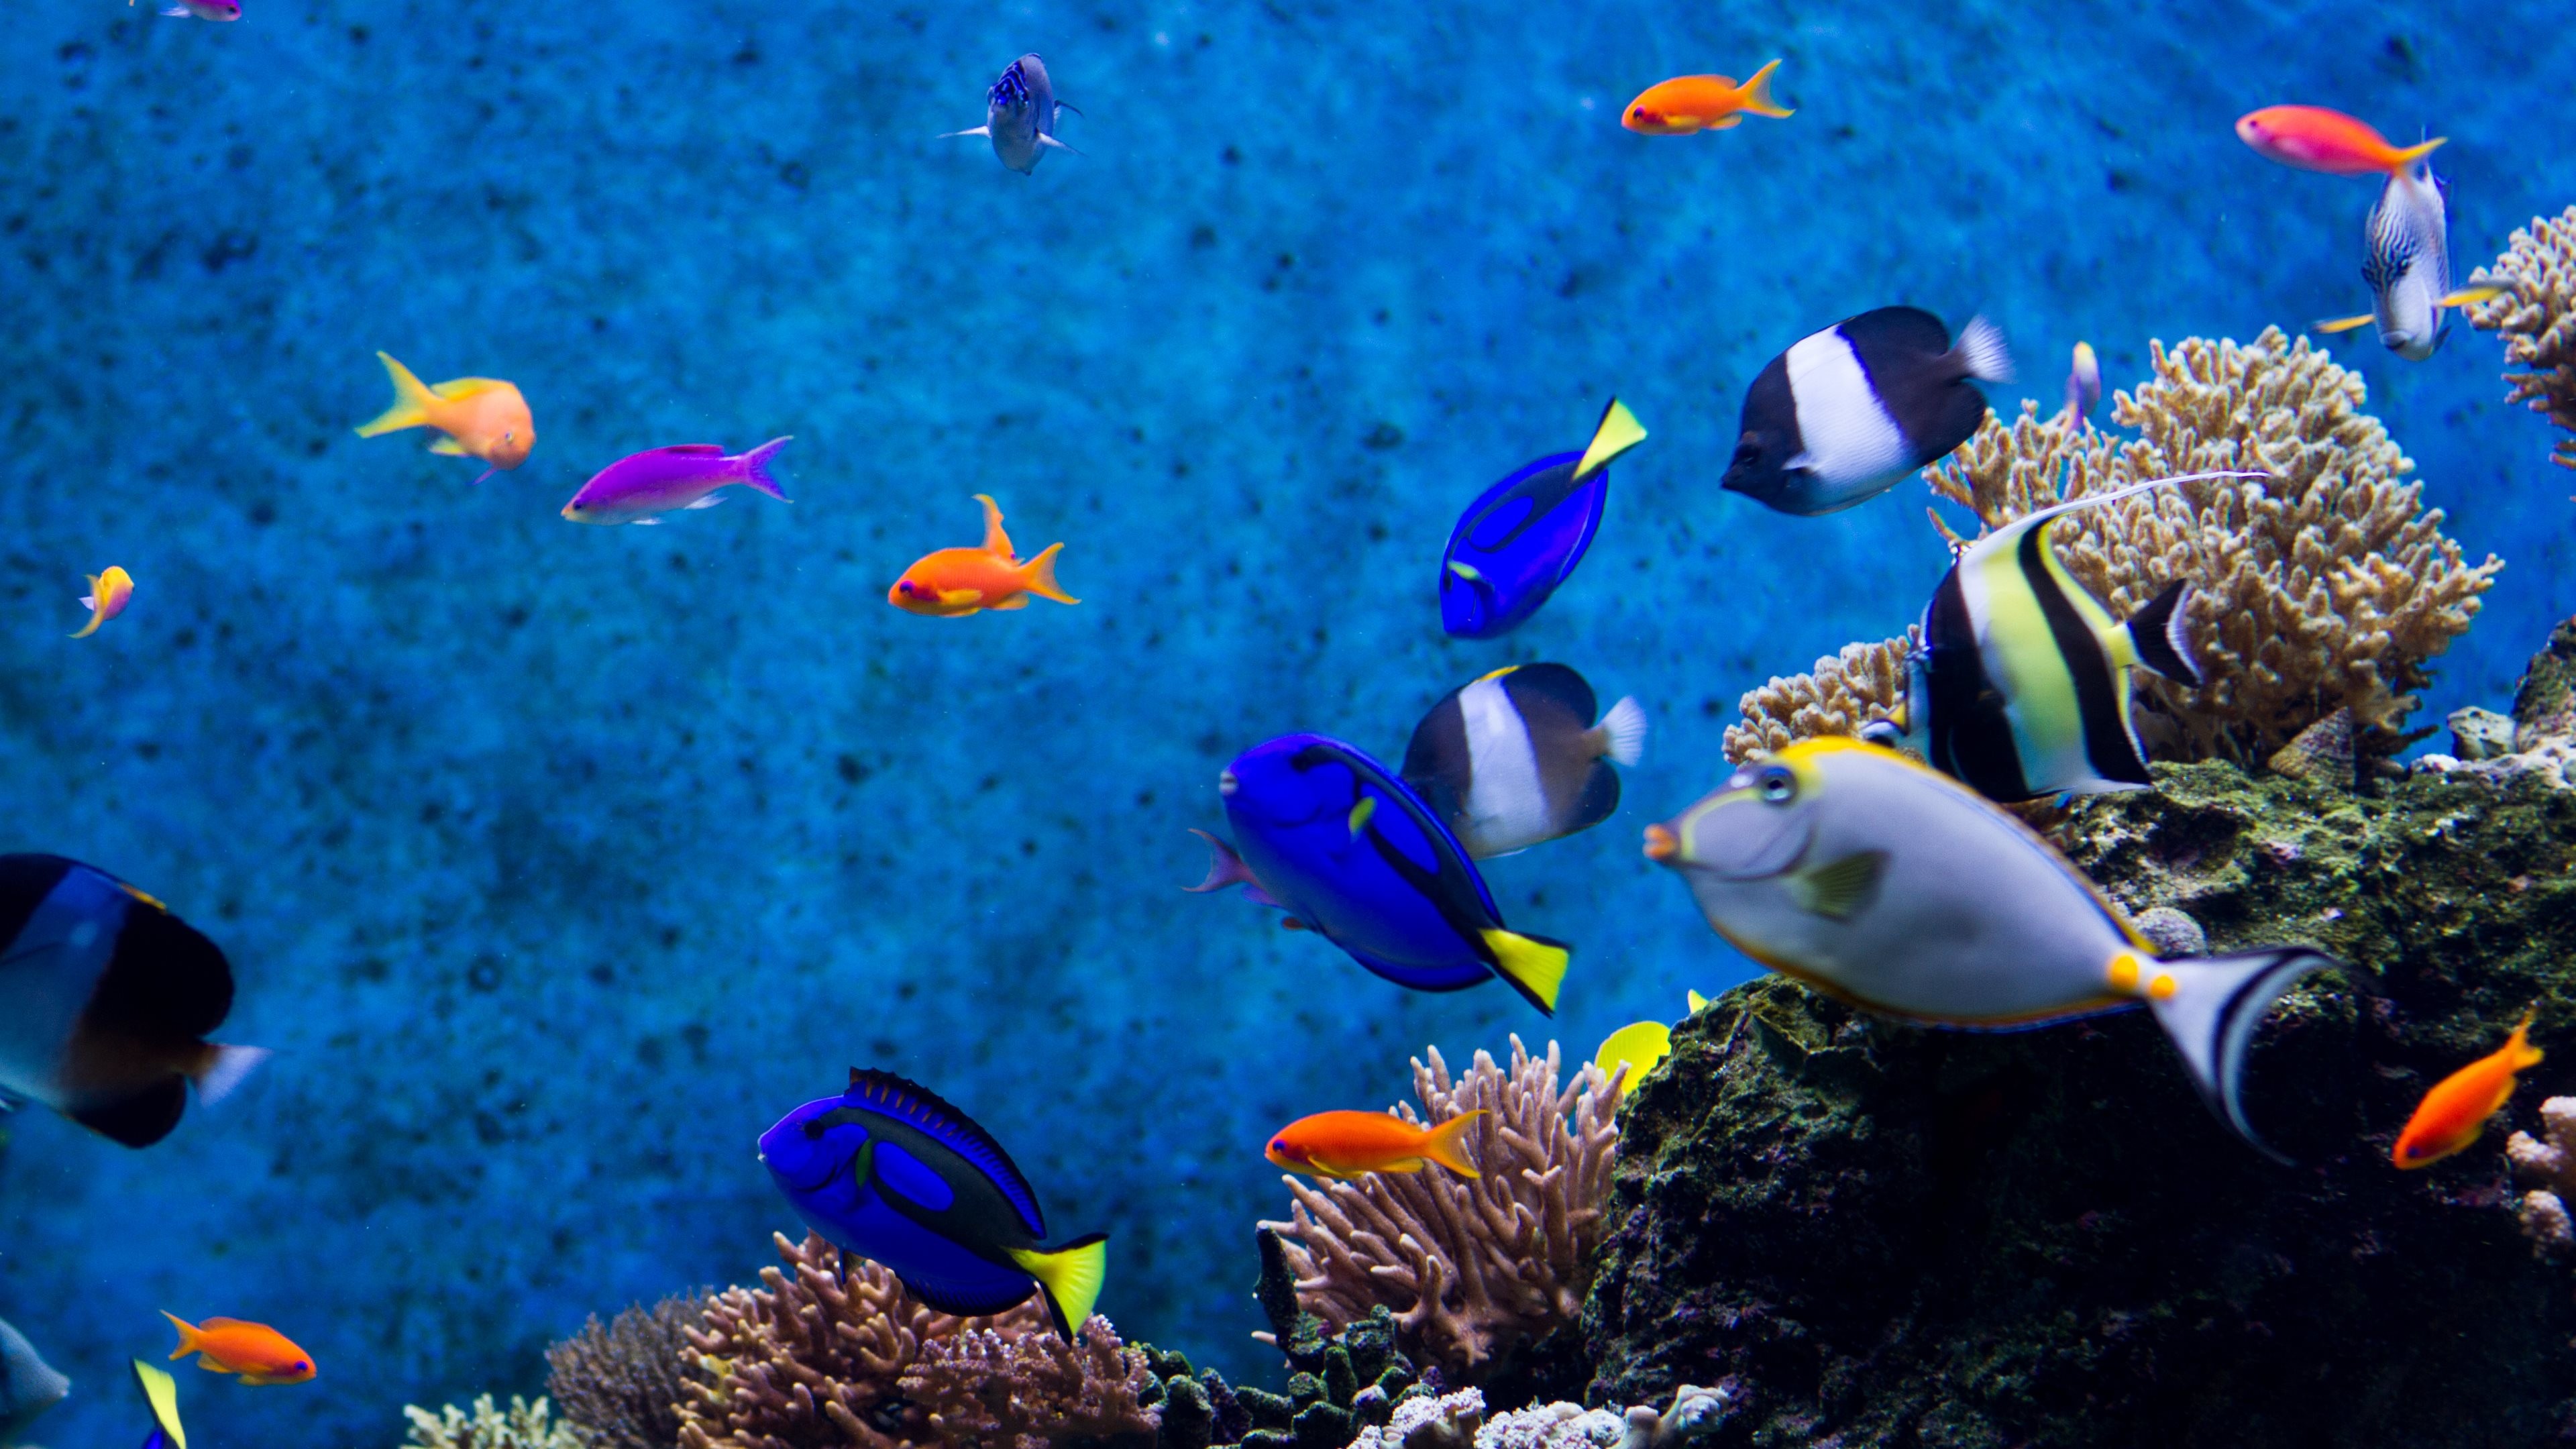 3840x2160 aquarium wallpaper win 81 Aquarium Wallpaper Moving Windows 10 -  ModaFinilsale